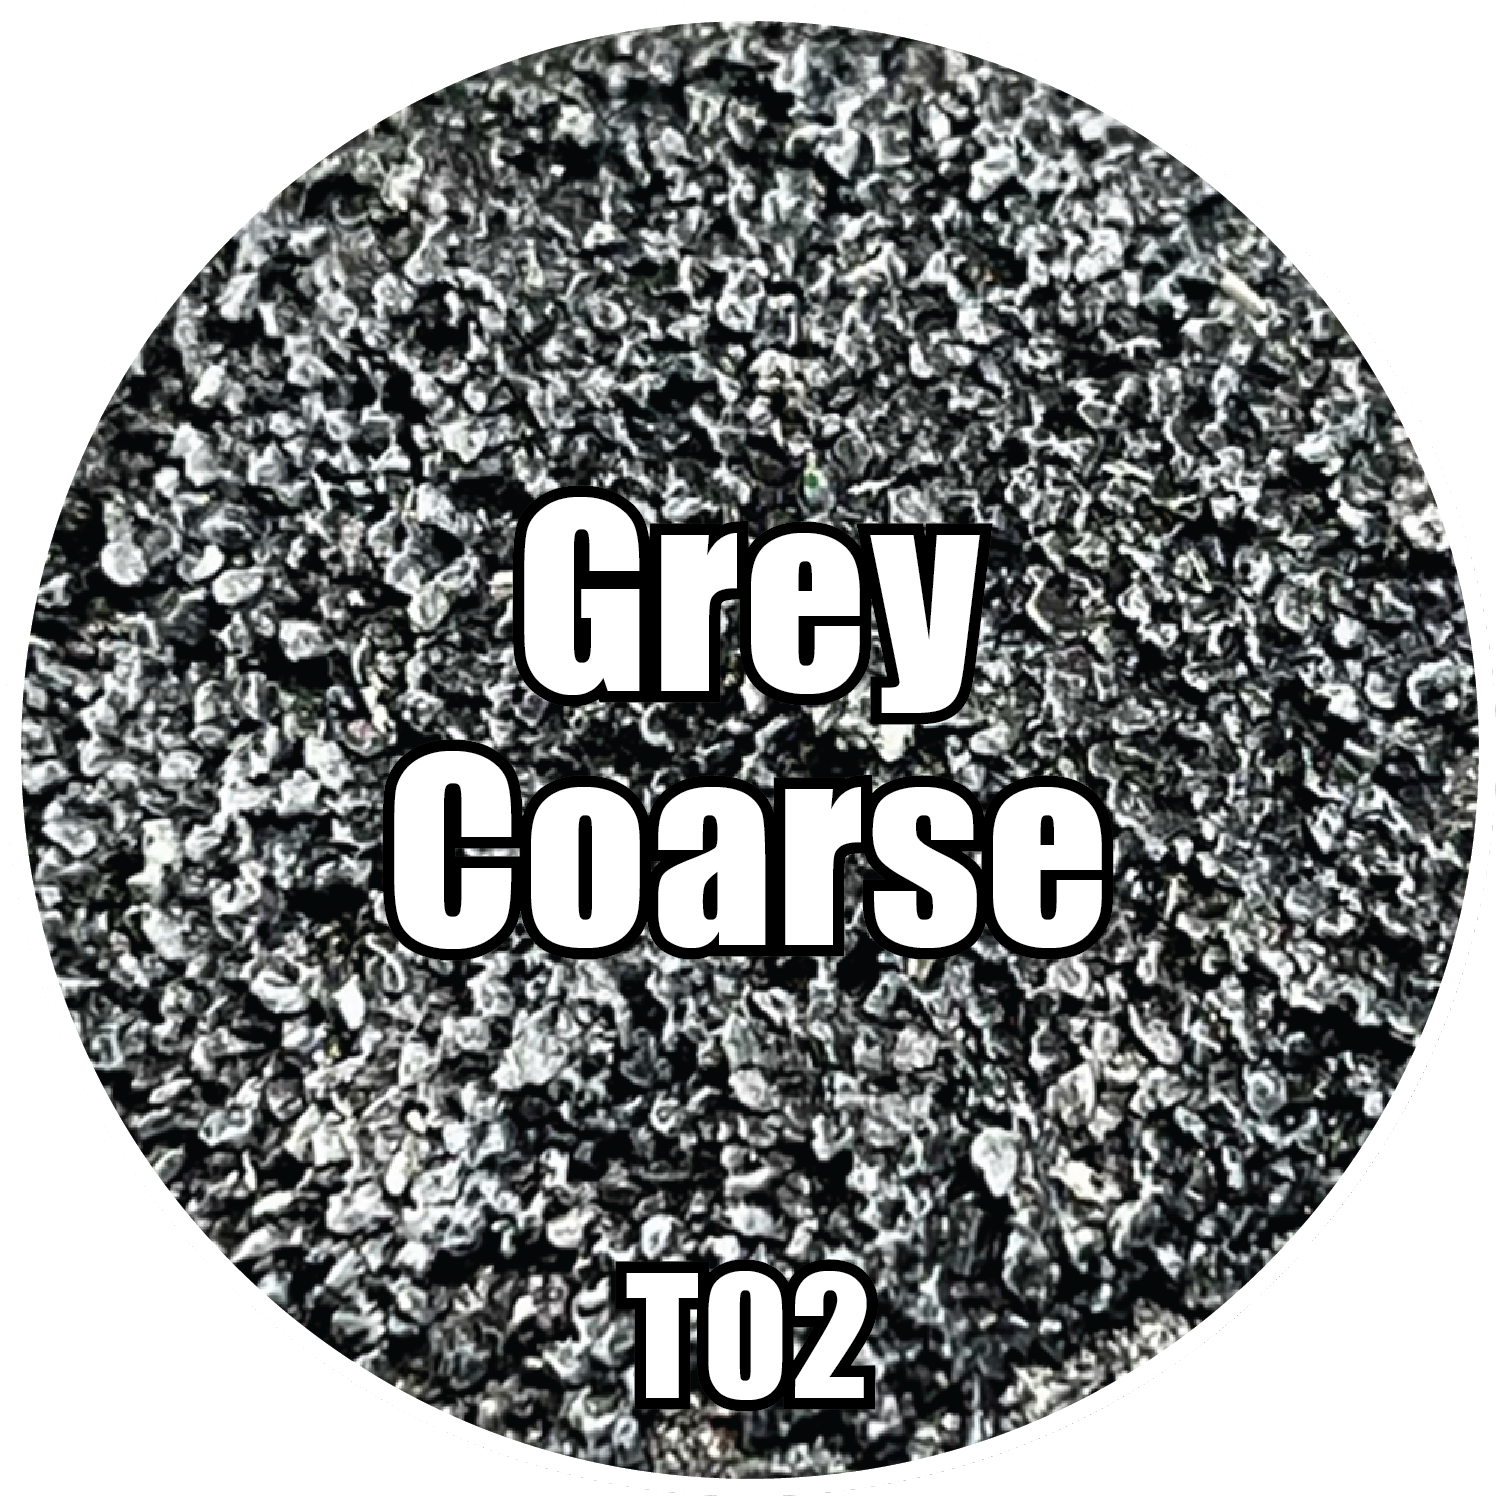 Pro Acryl Basing Textures - Grey Earth - COARSE 120ml